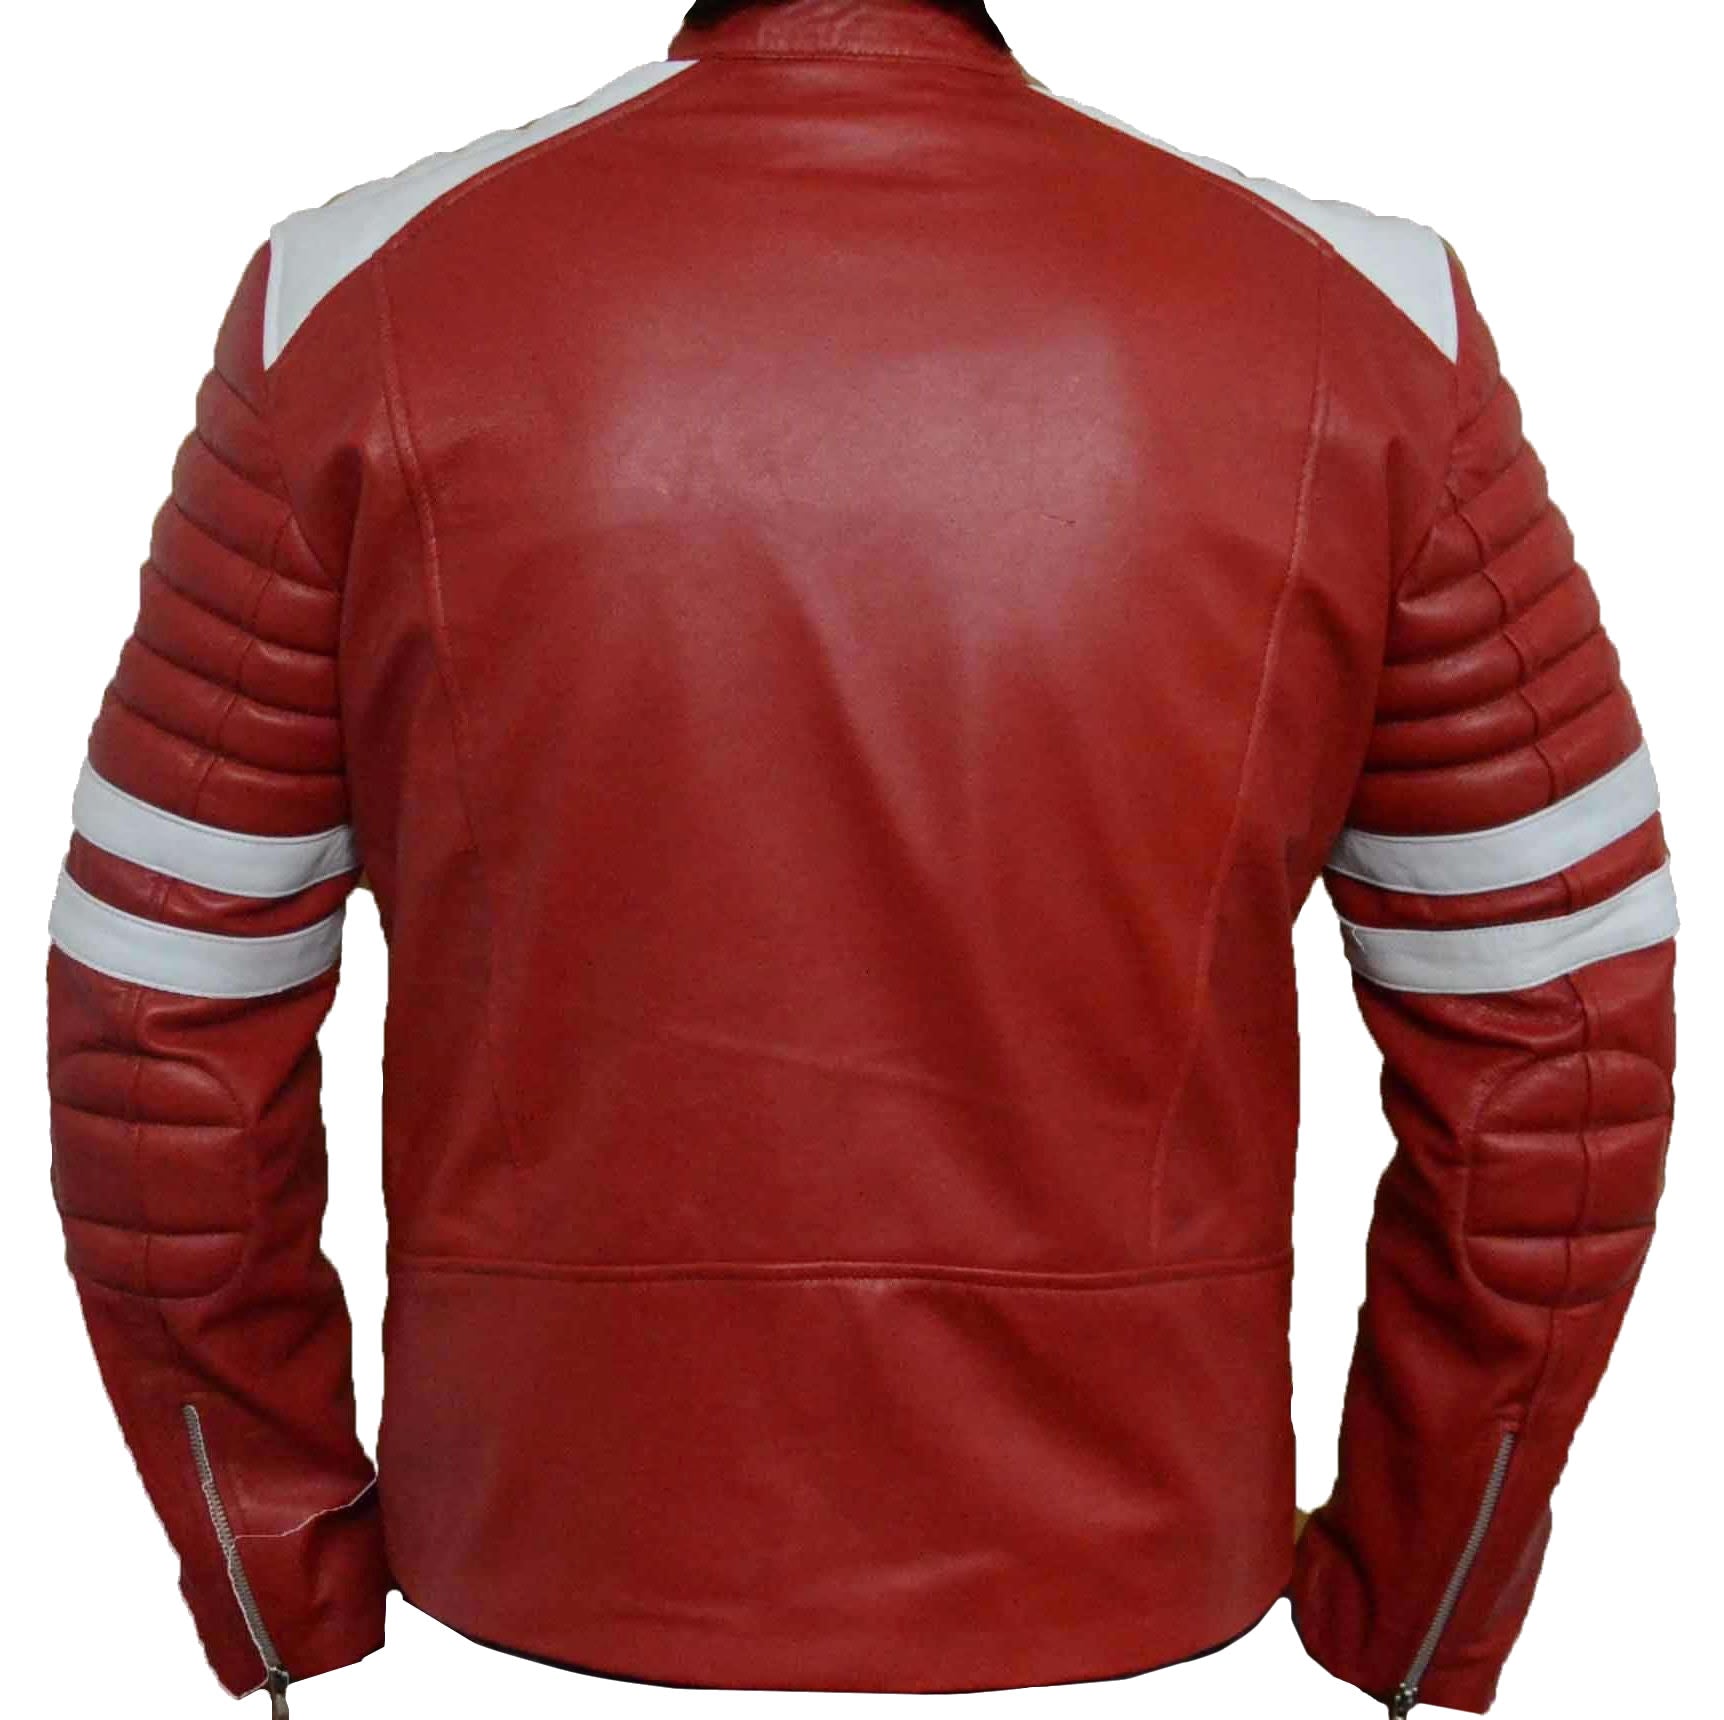 Classyak Original Fashion Leather Jacket Red with White Stripes